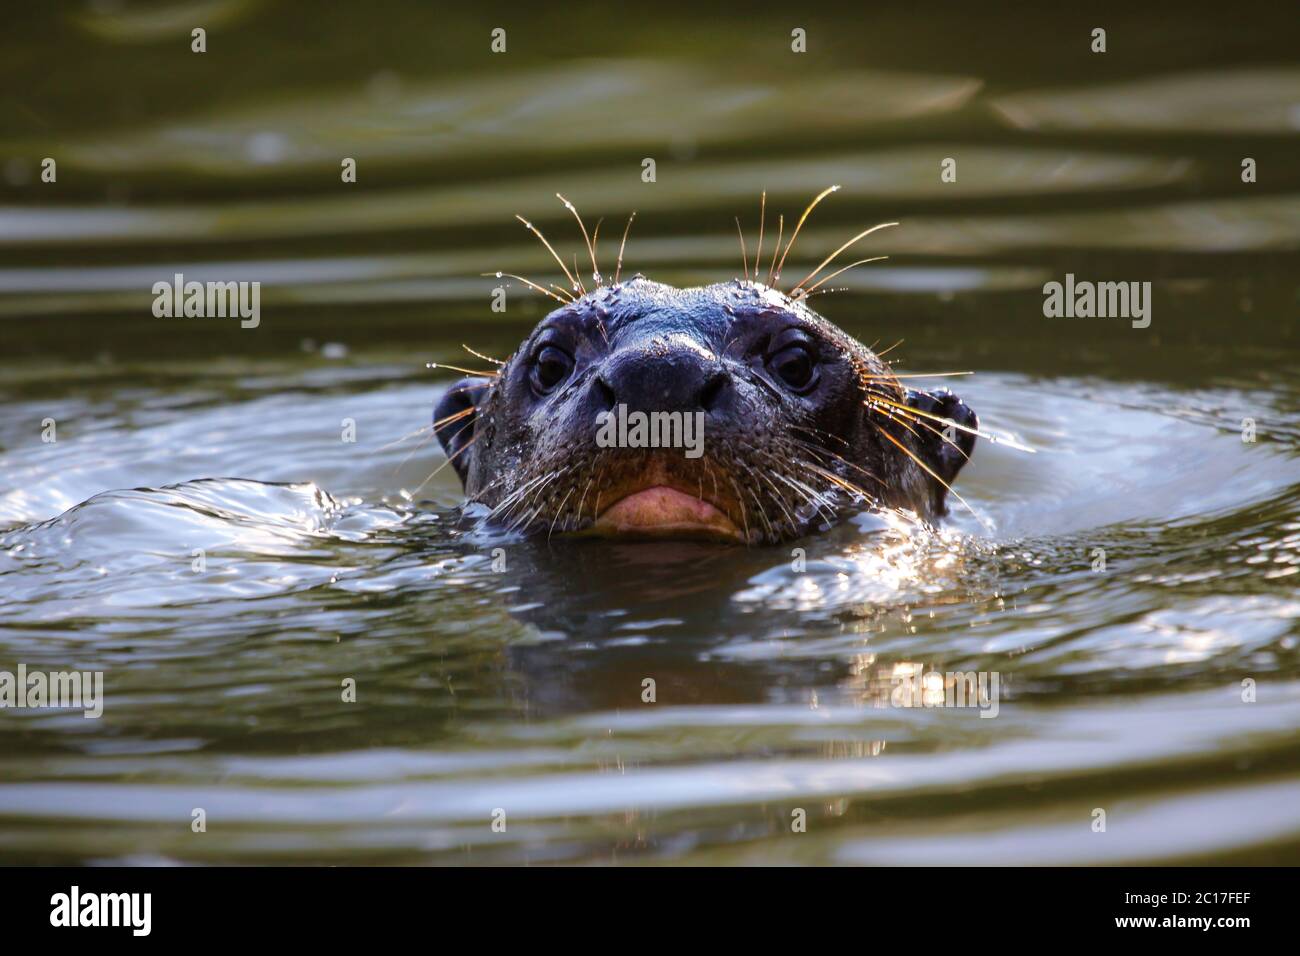 In prossimità di una lontra gigante nuotare in un fiume, testa sopra l'acqua, Pantanal, Brasile Foto Stock